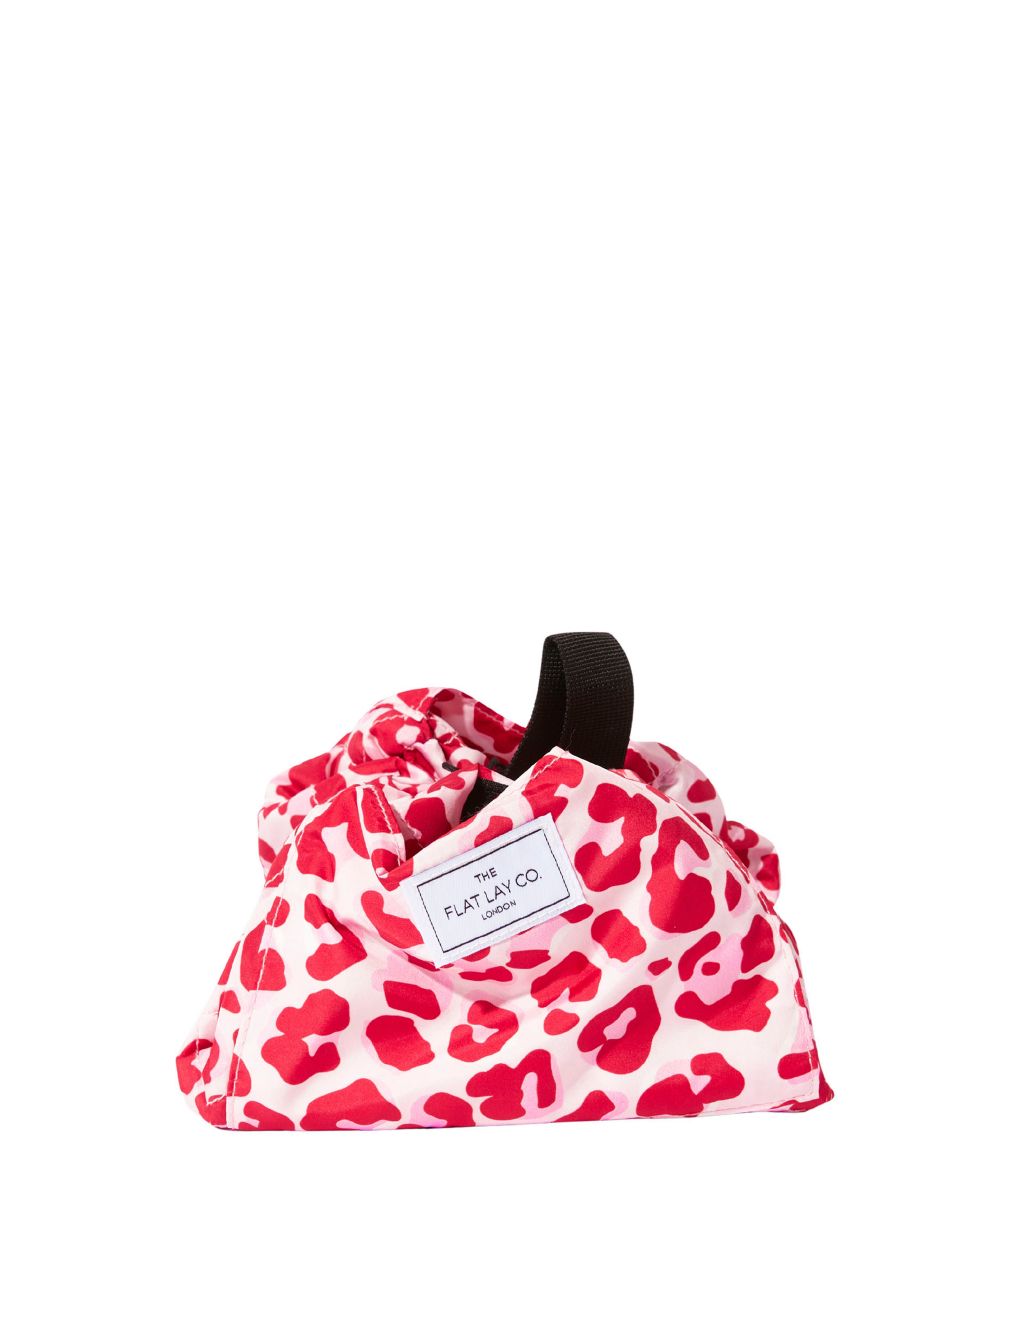 Open Flat Makeup Bag In Pink Leopard 2 of 6